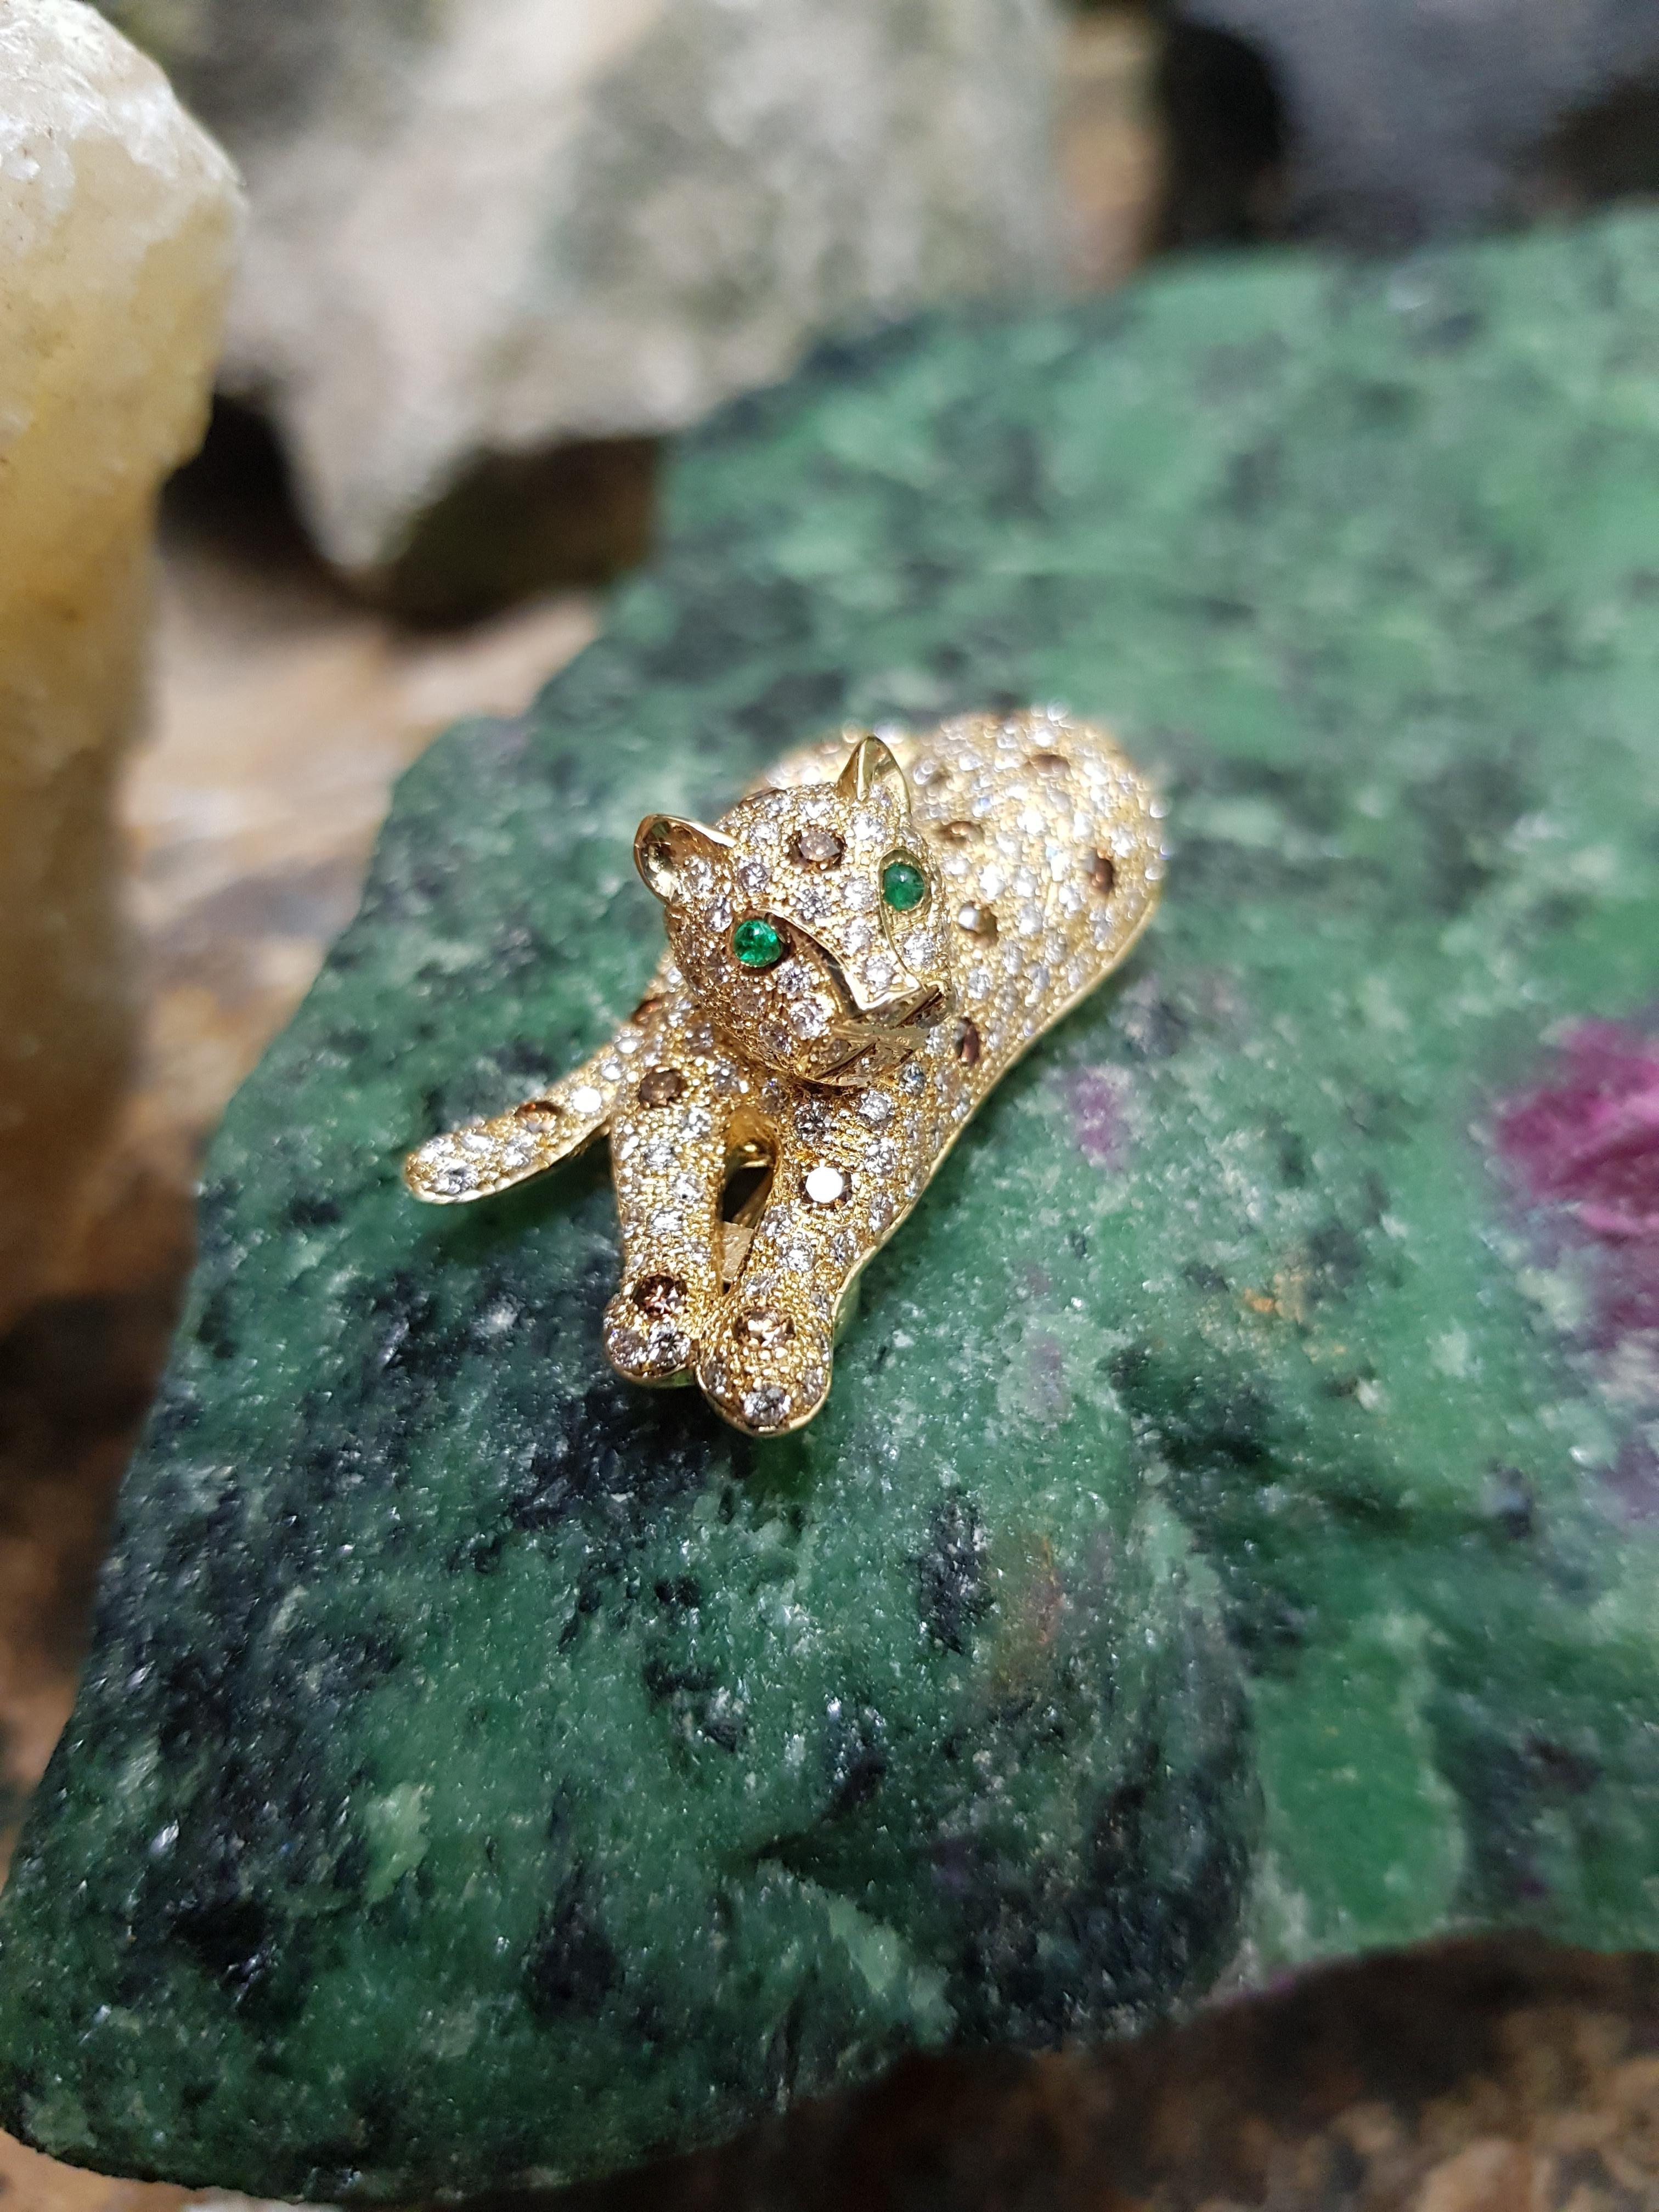 Brown Diamond 0.76 carat, Brown Diamond 2.33 carats with Cabochon Emerald 0.02 carat Brooch set in 18 Karat Gold Settings

Width: 3.8 cm
Length: 2.0 cm 

